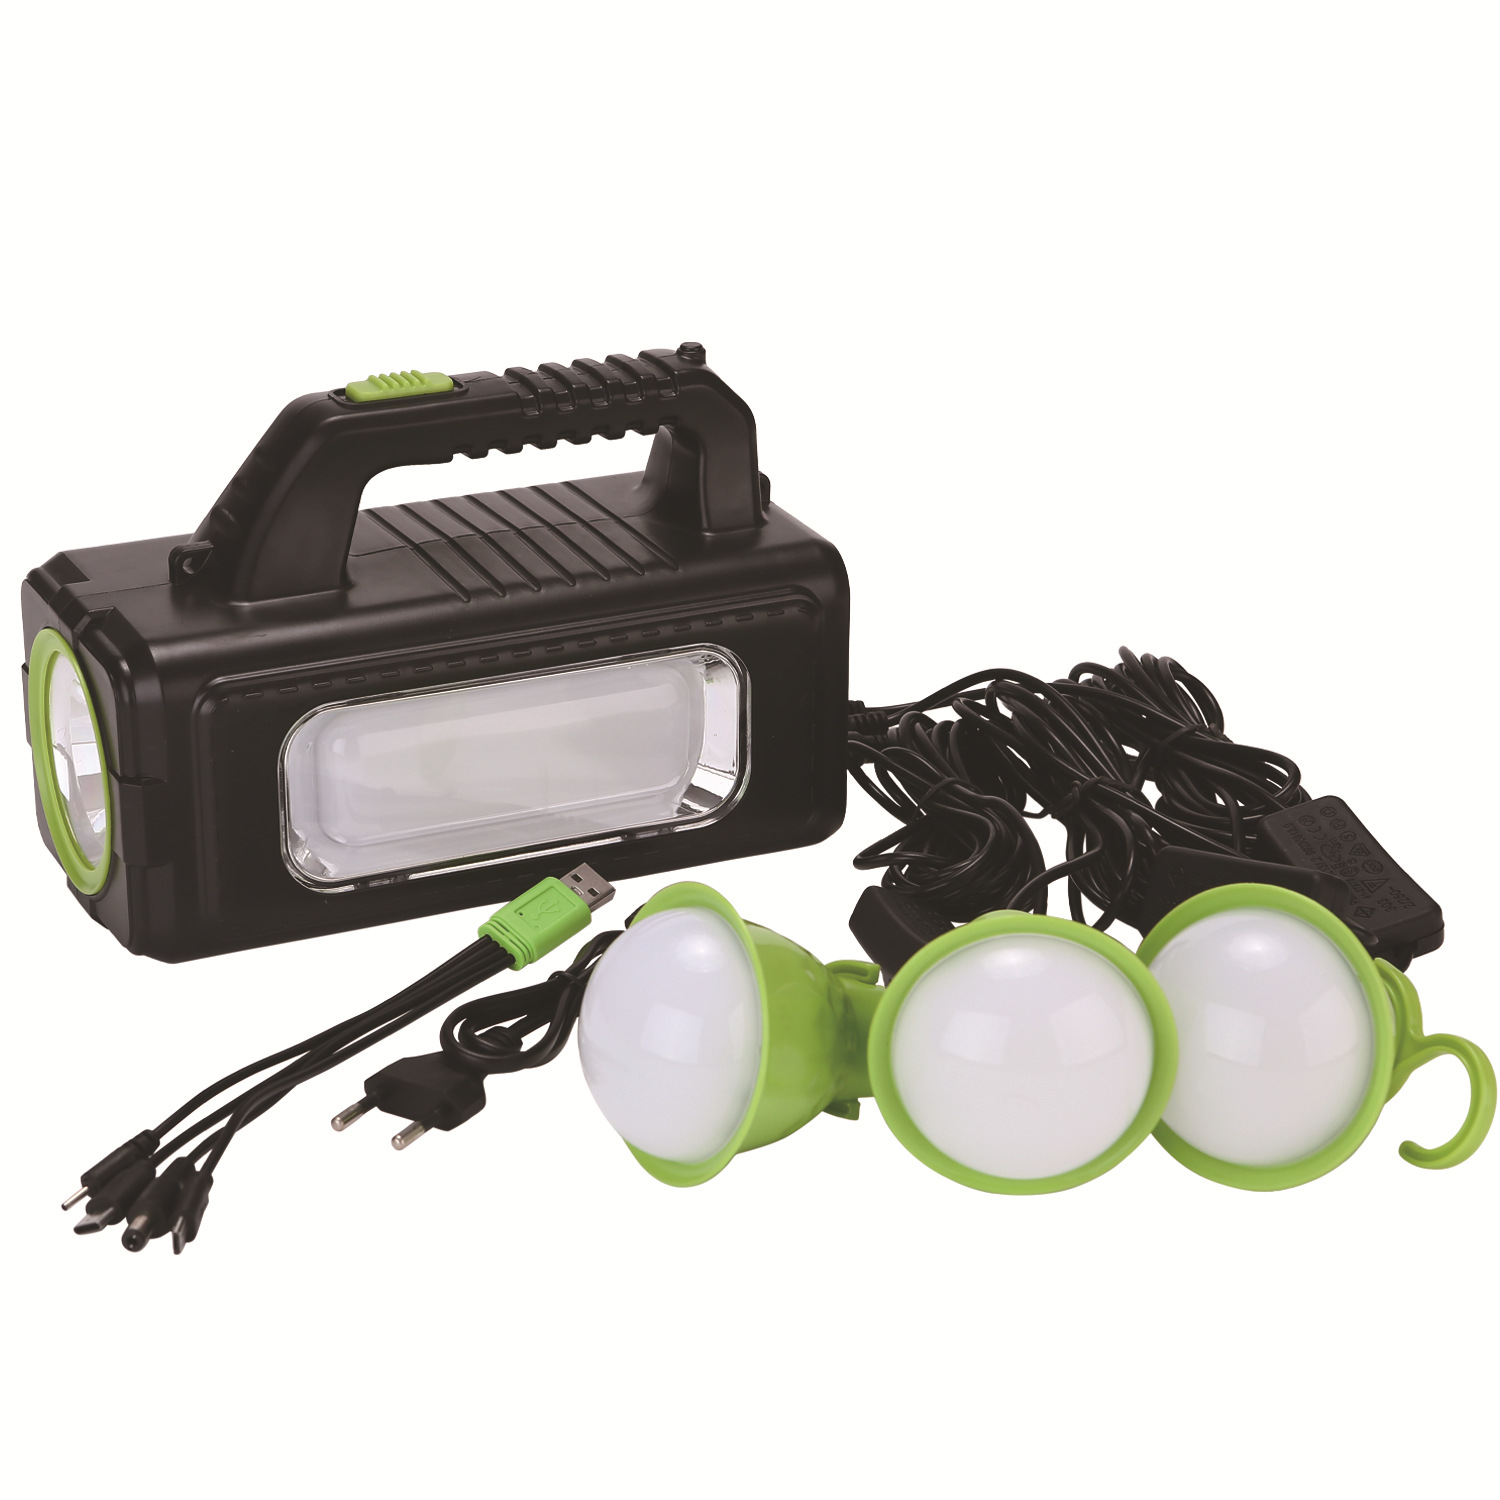 Dt-9013 Outdoor Lighting Led Light Portable Solar Lighting System Emergency Charging Camping Lamp